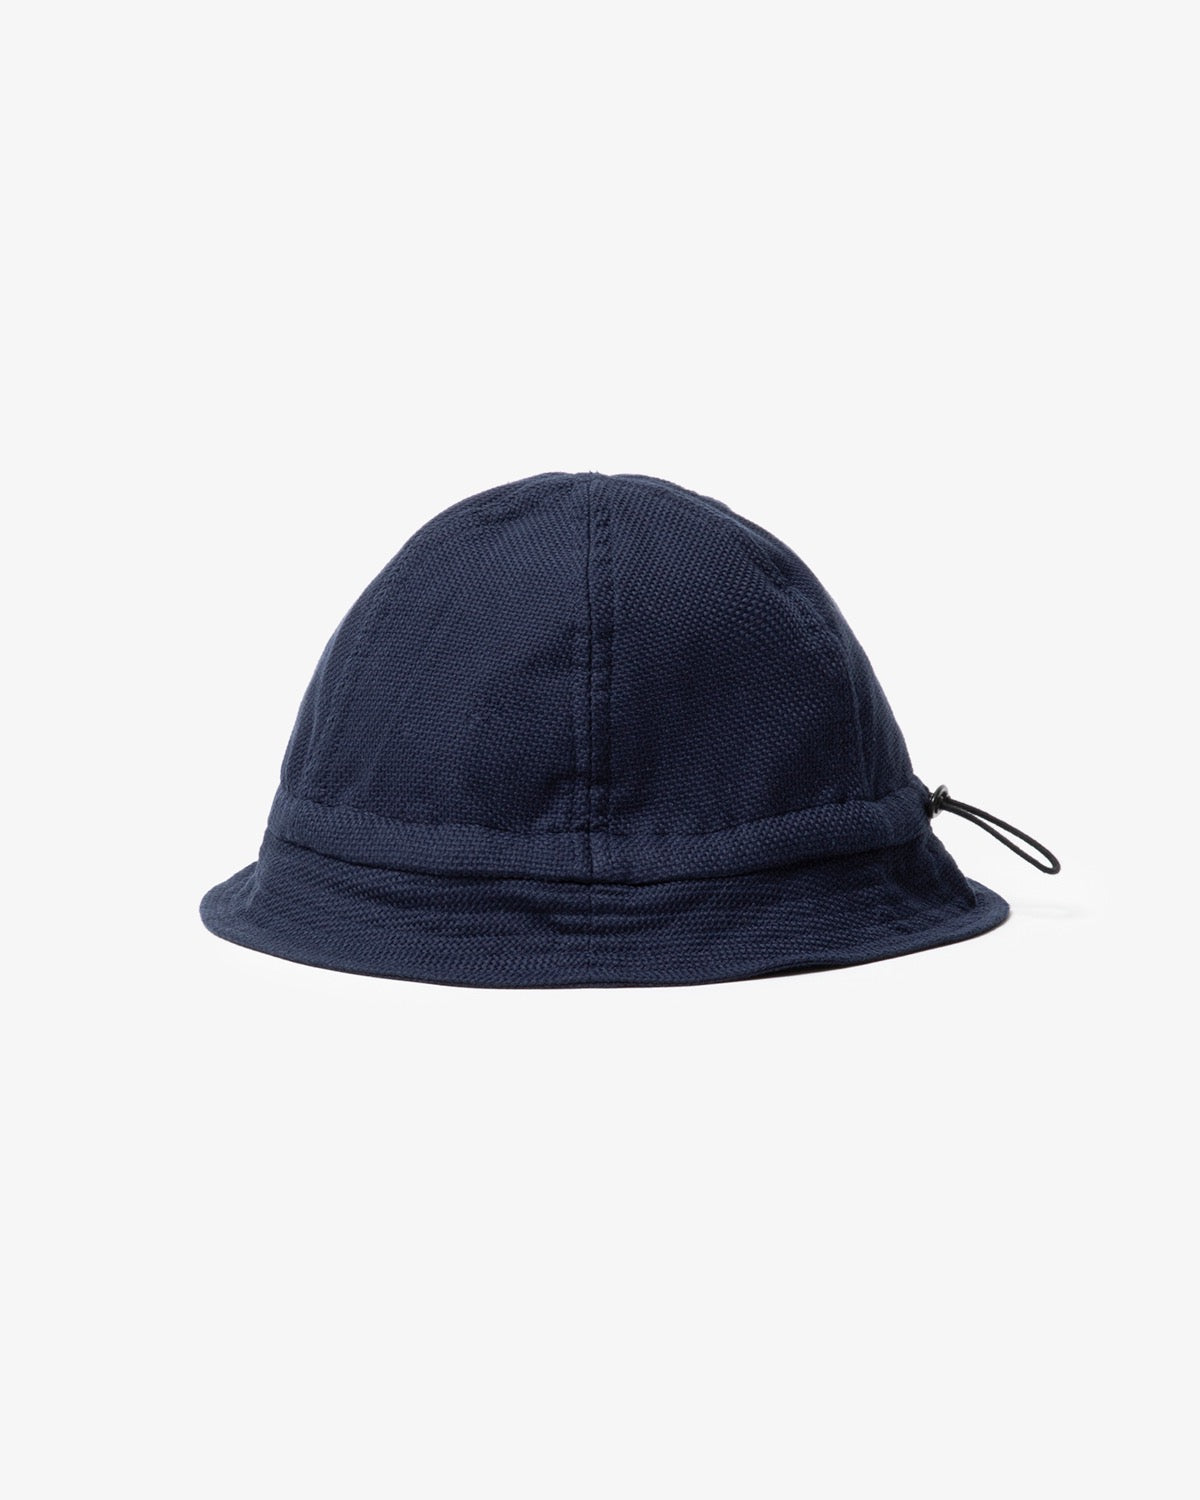 "BED HEAD HAT" - SASHIKO STYLE DOBBY CLOTH